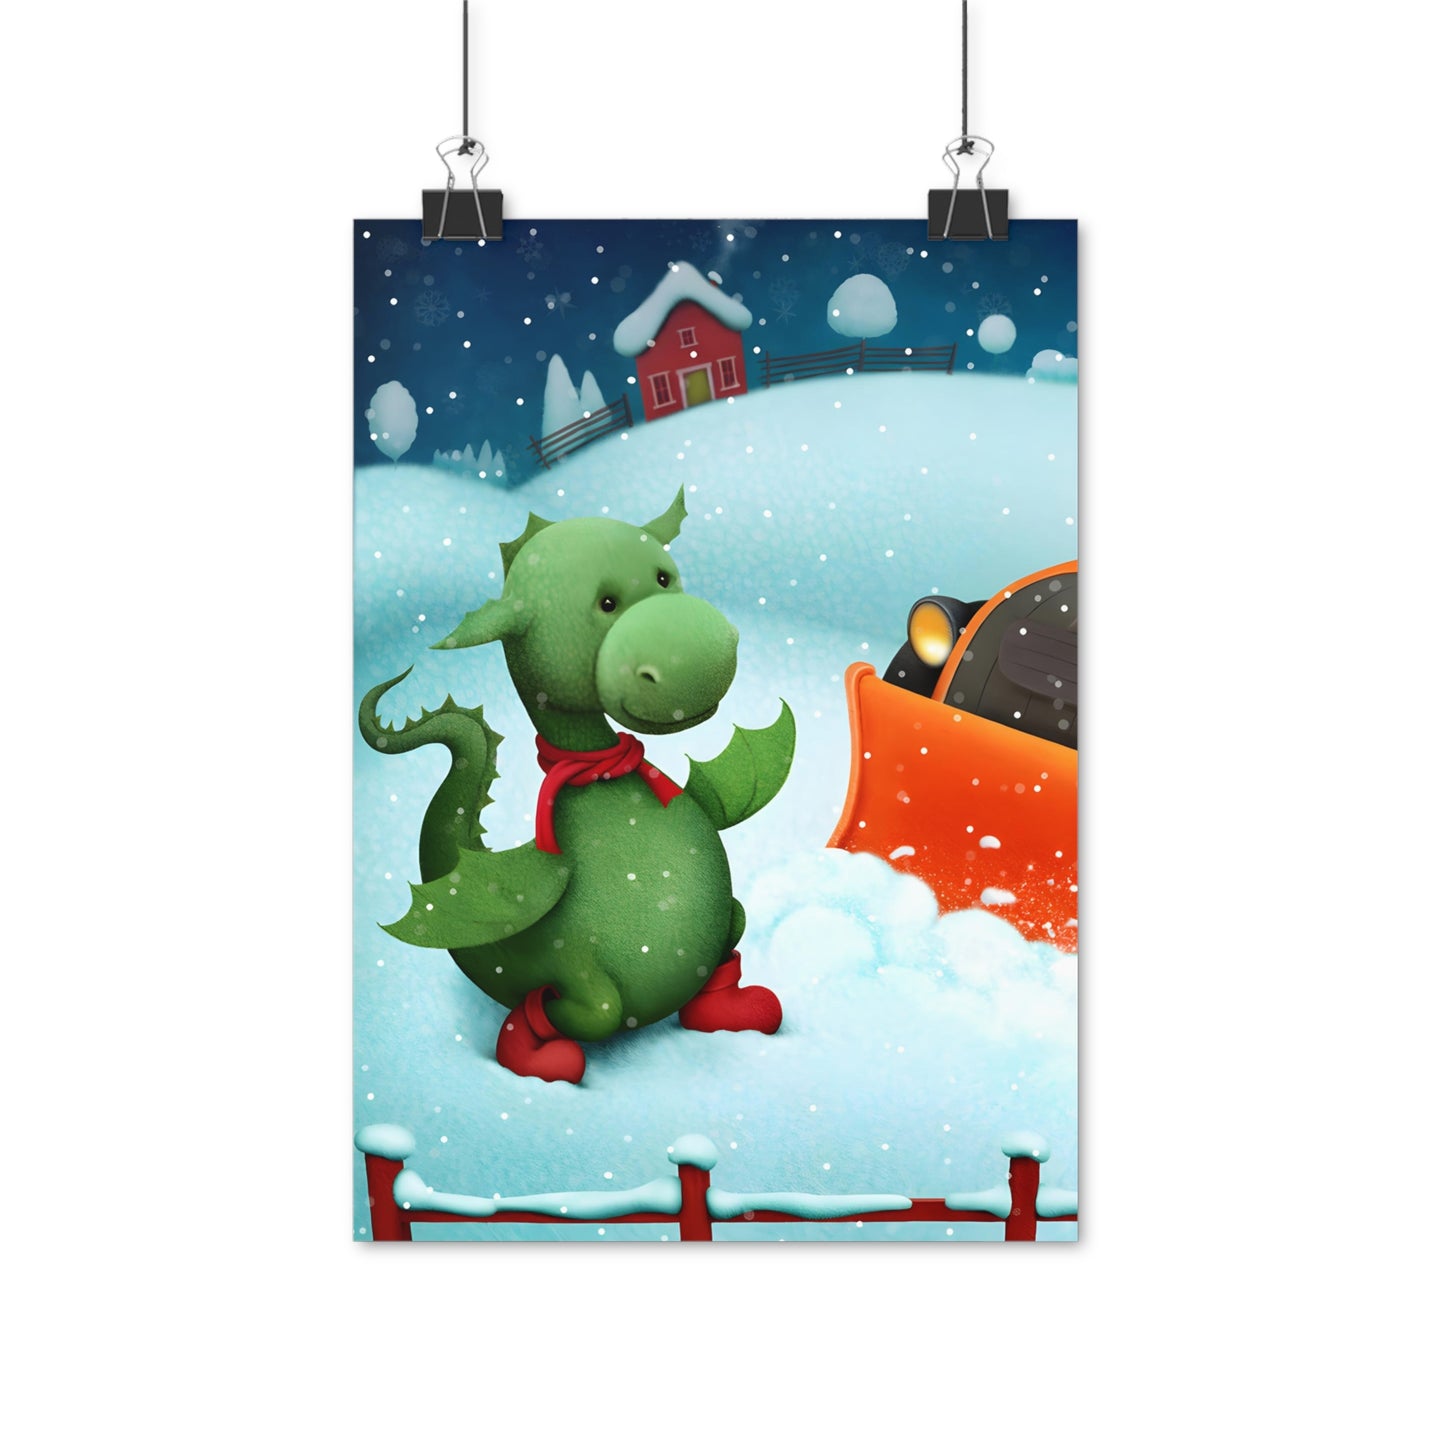 Posters - Snow dragon